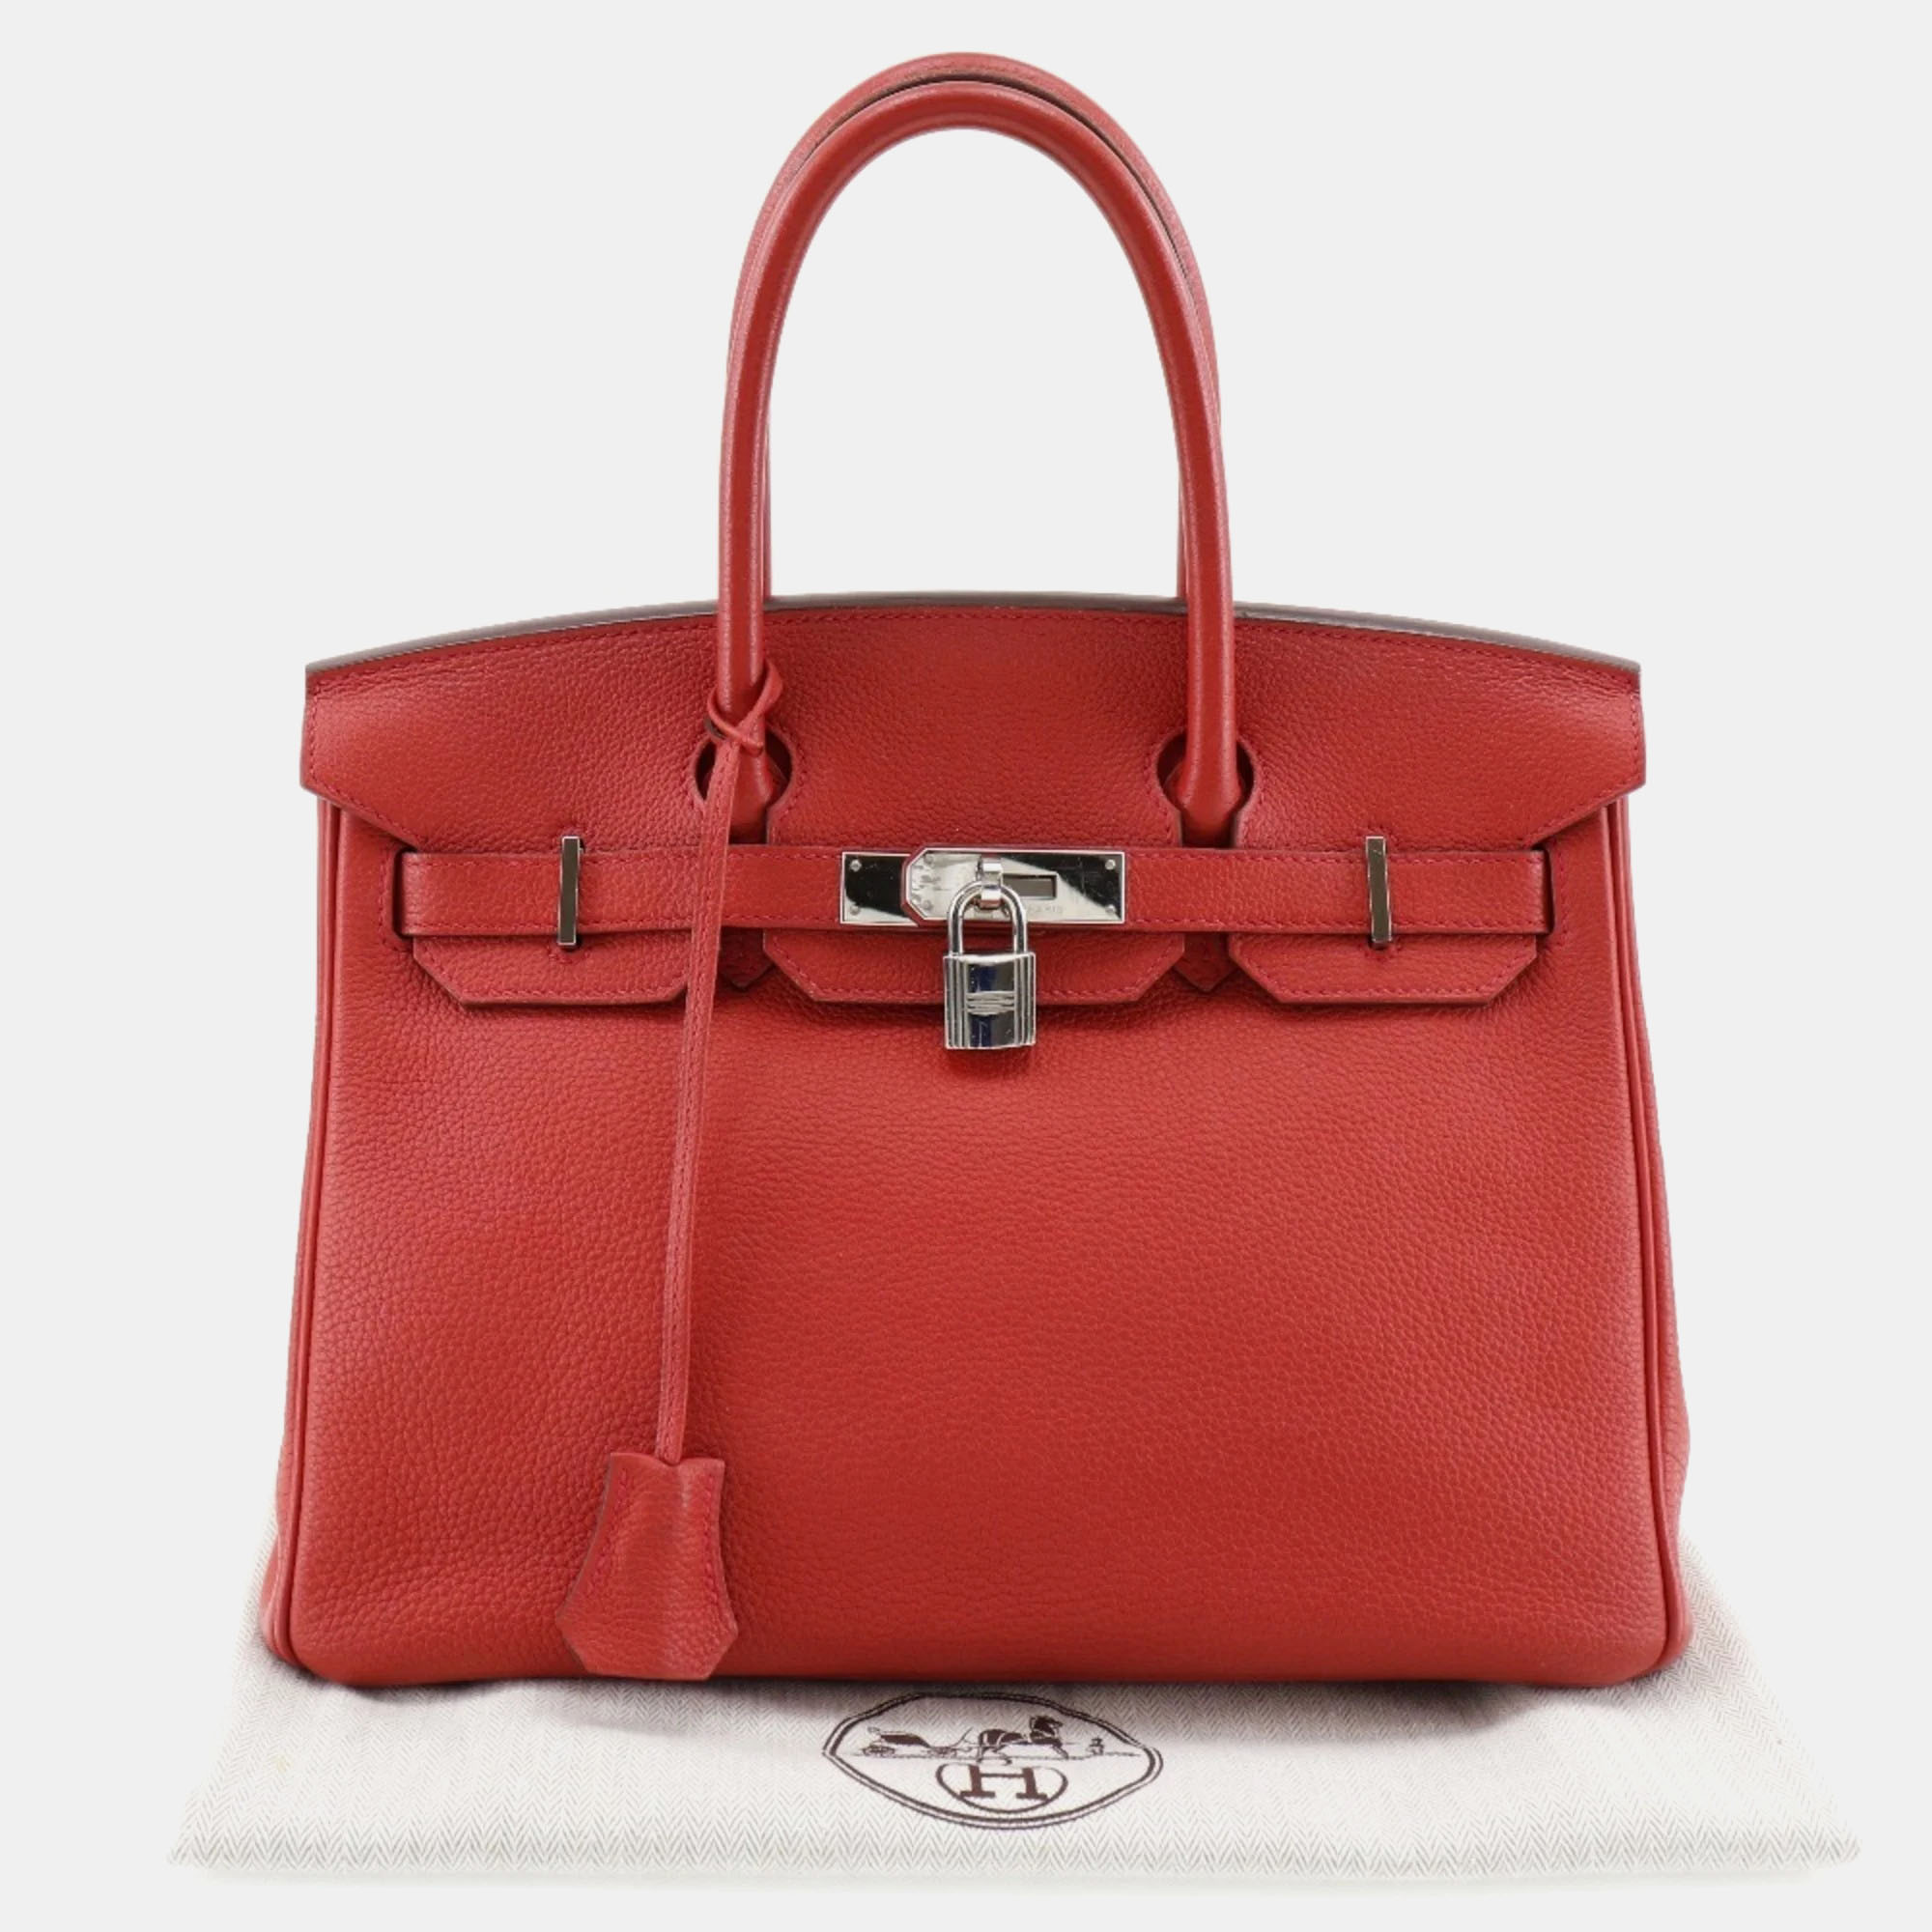 Hermes rouge togo birkin 30 handbag